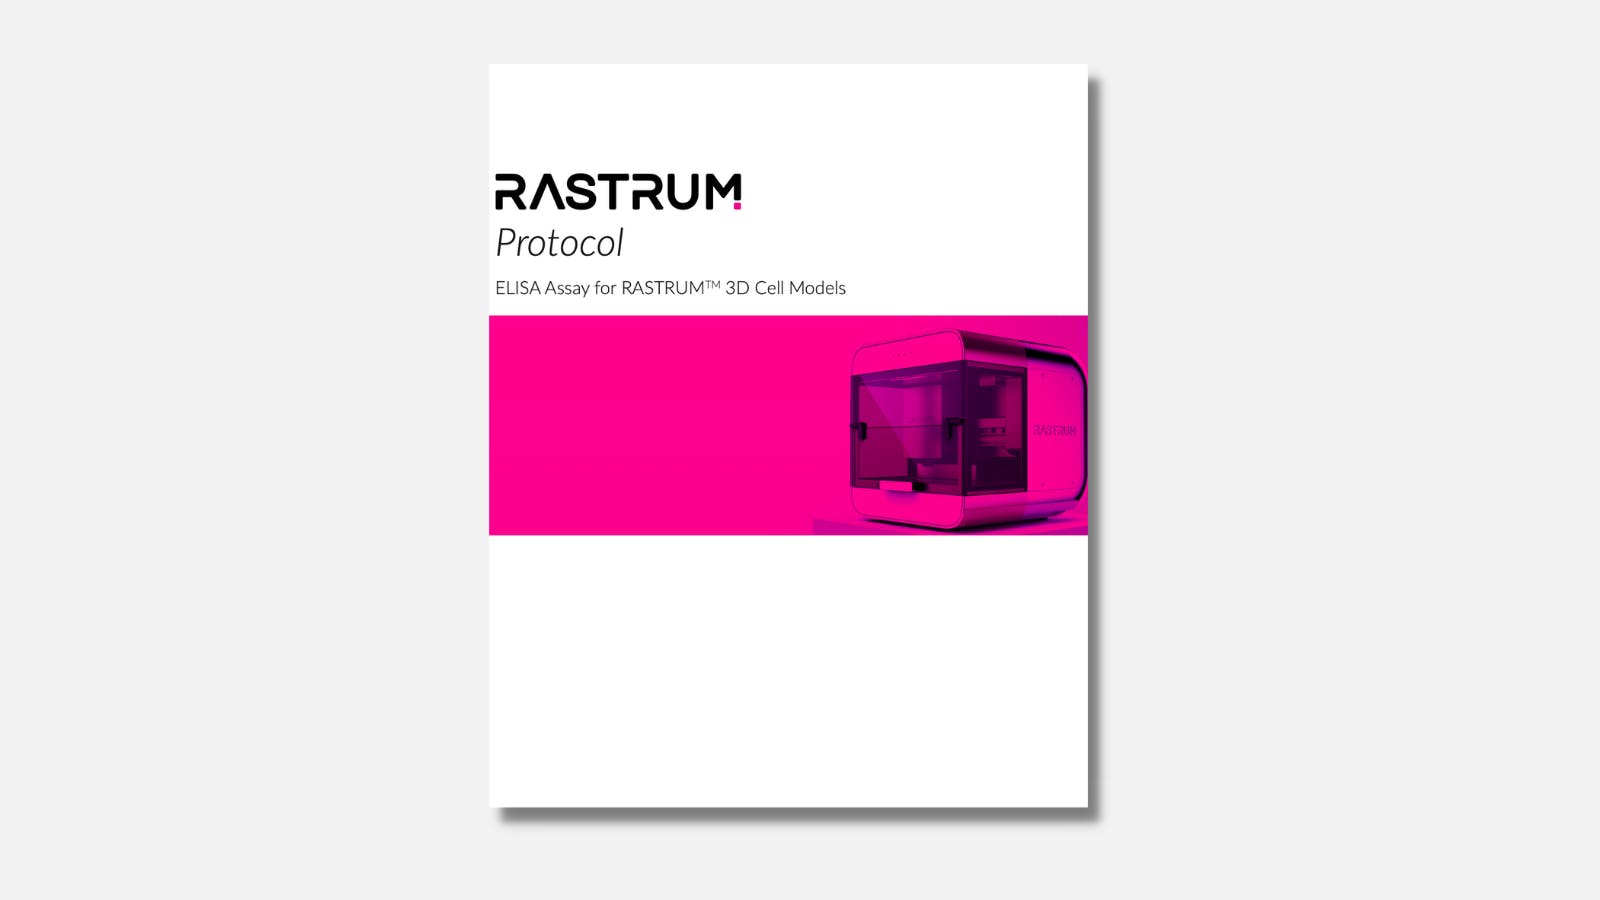 ELISA Assay for RASTRUM™ 3D Cell Models